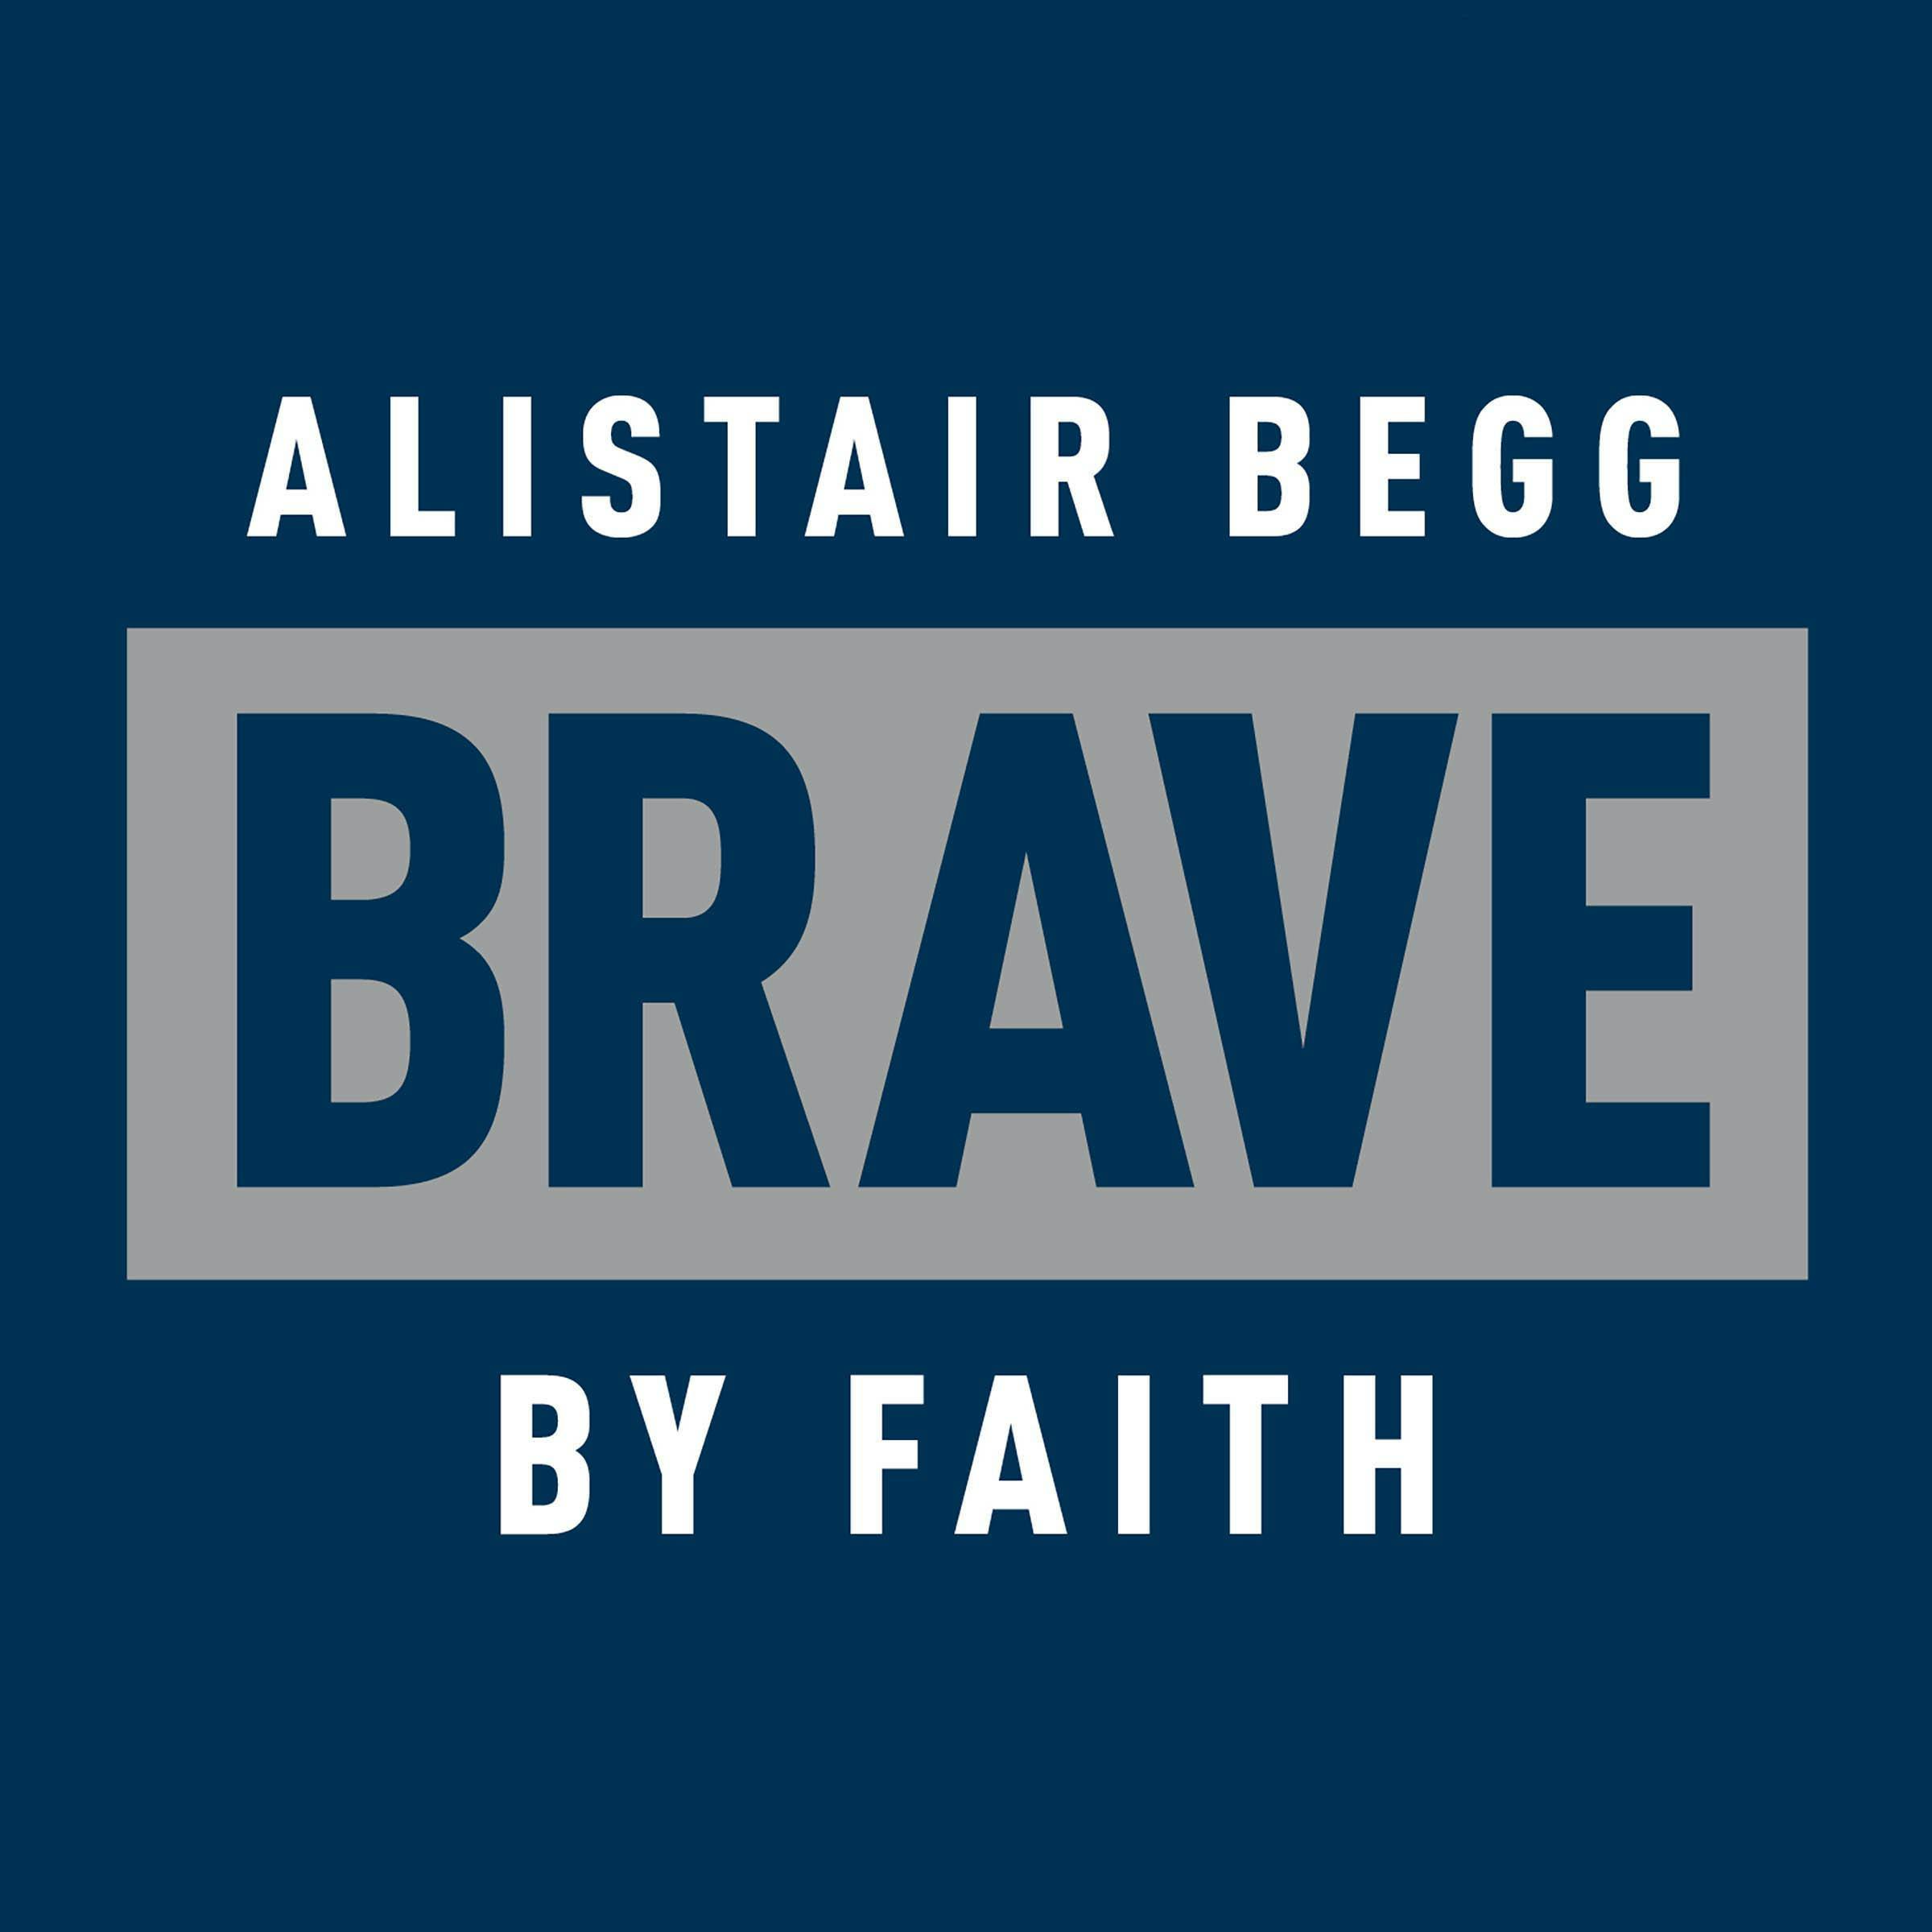 Brave by Faith: God-Sized Confidence in a Post-Christian World - Alistair Begg